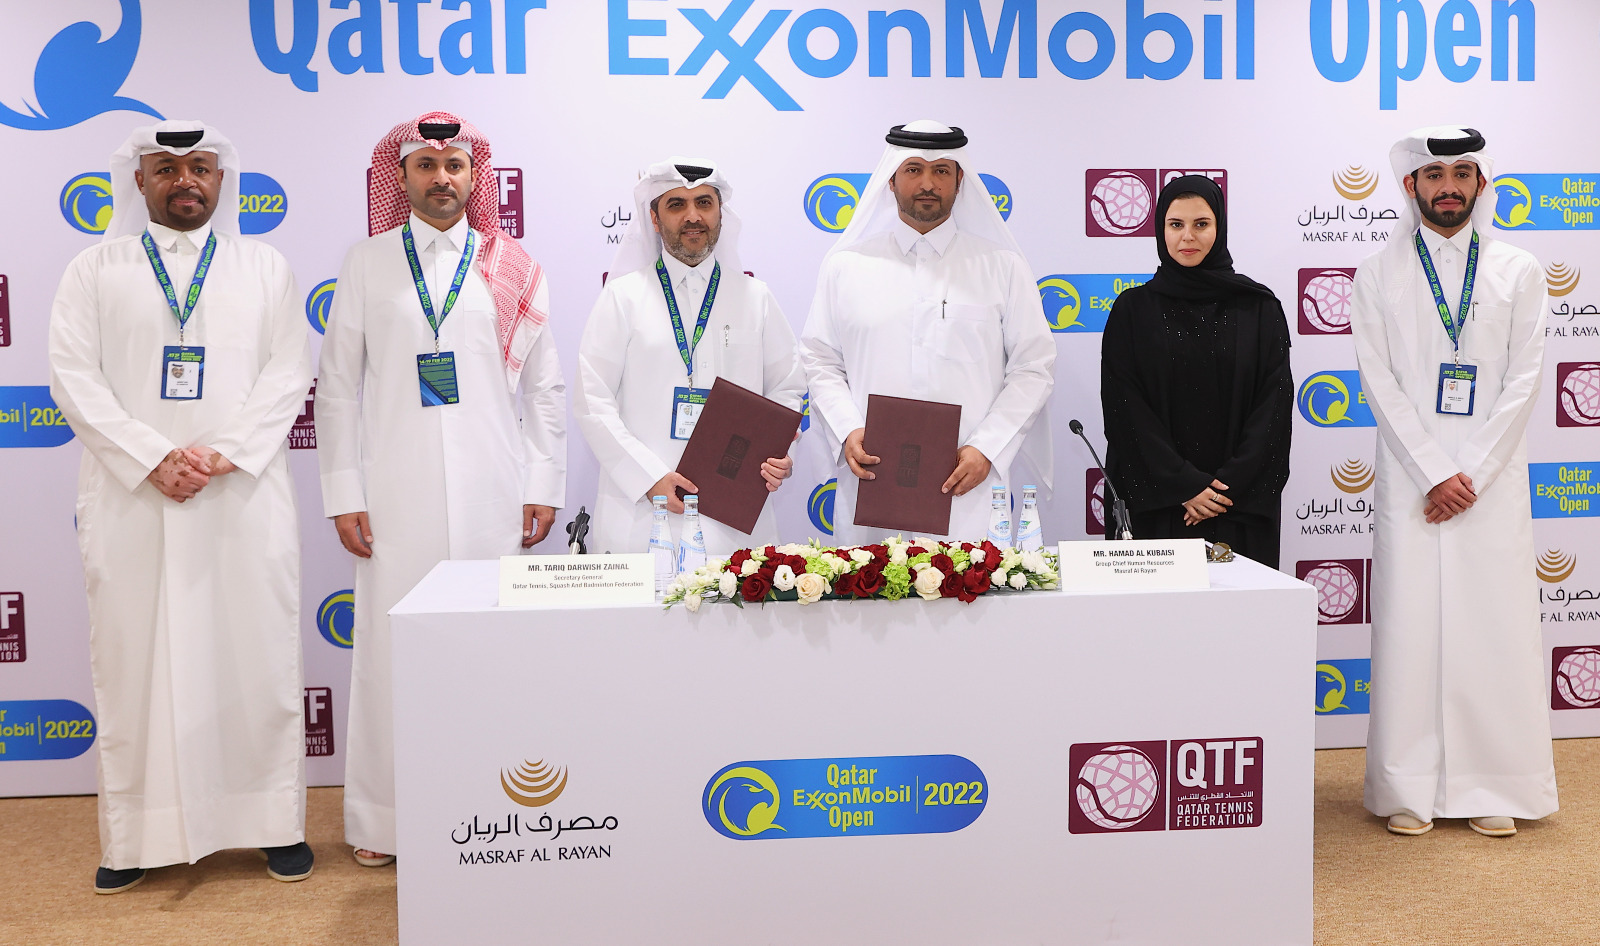 QTSBF, Masraf Al Rayan renew sponsorship agreement for Qatar ExxonMobil Open